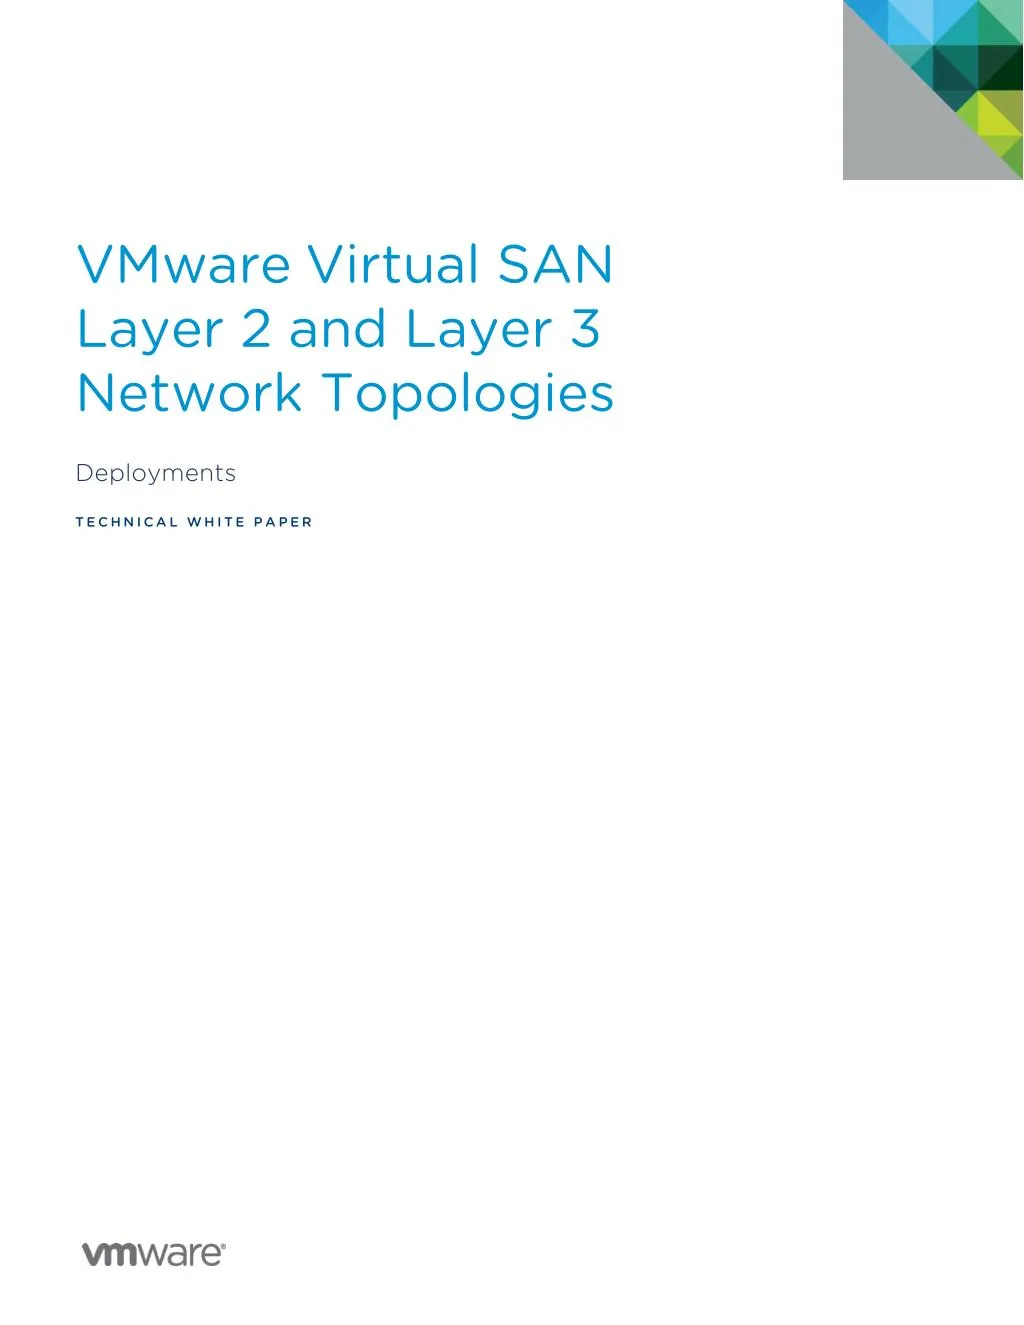 vmware virtual san layer 2 and layer 3 network